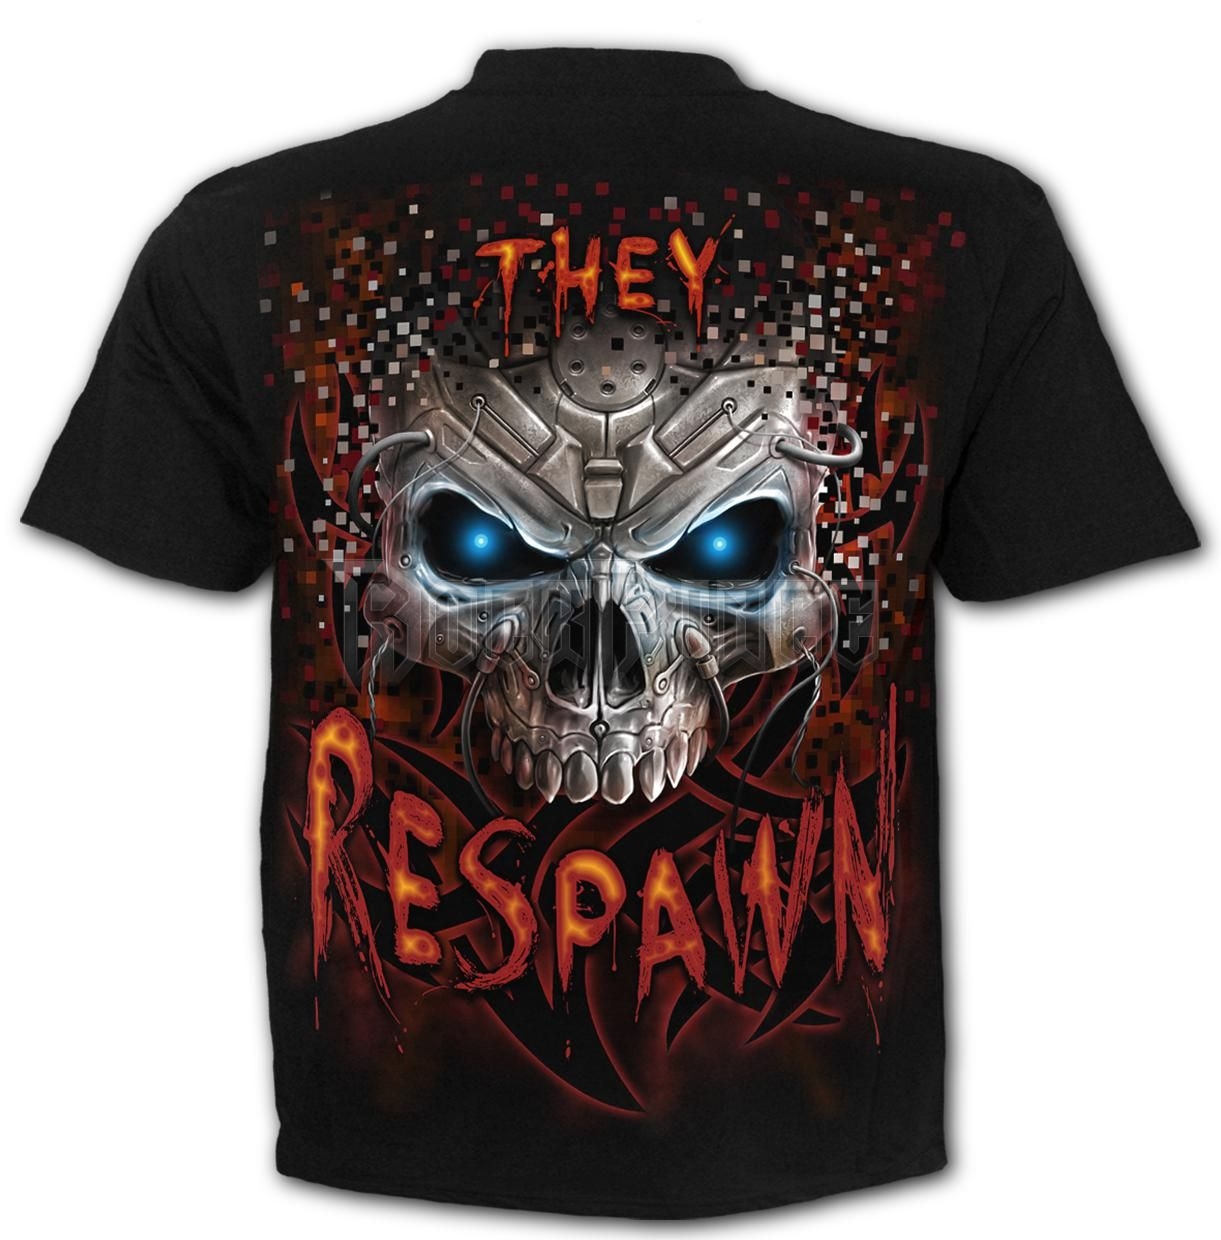 RESPAWN - Kids T-Shirt Black (Plain) - T183K101